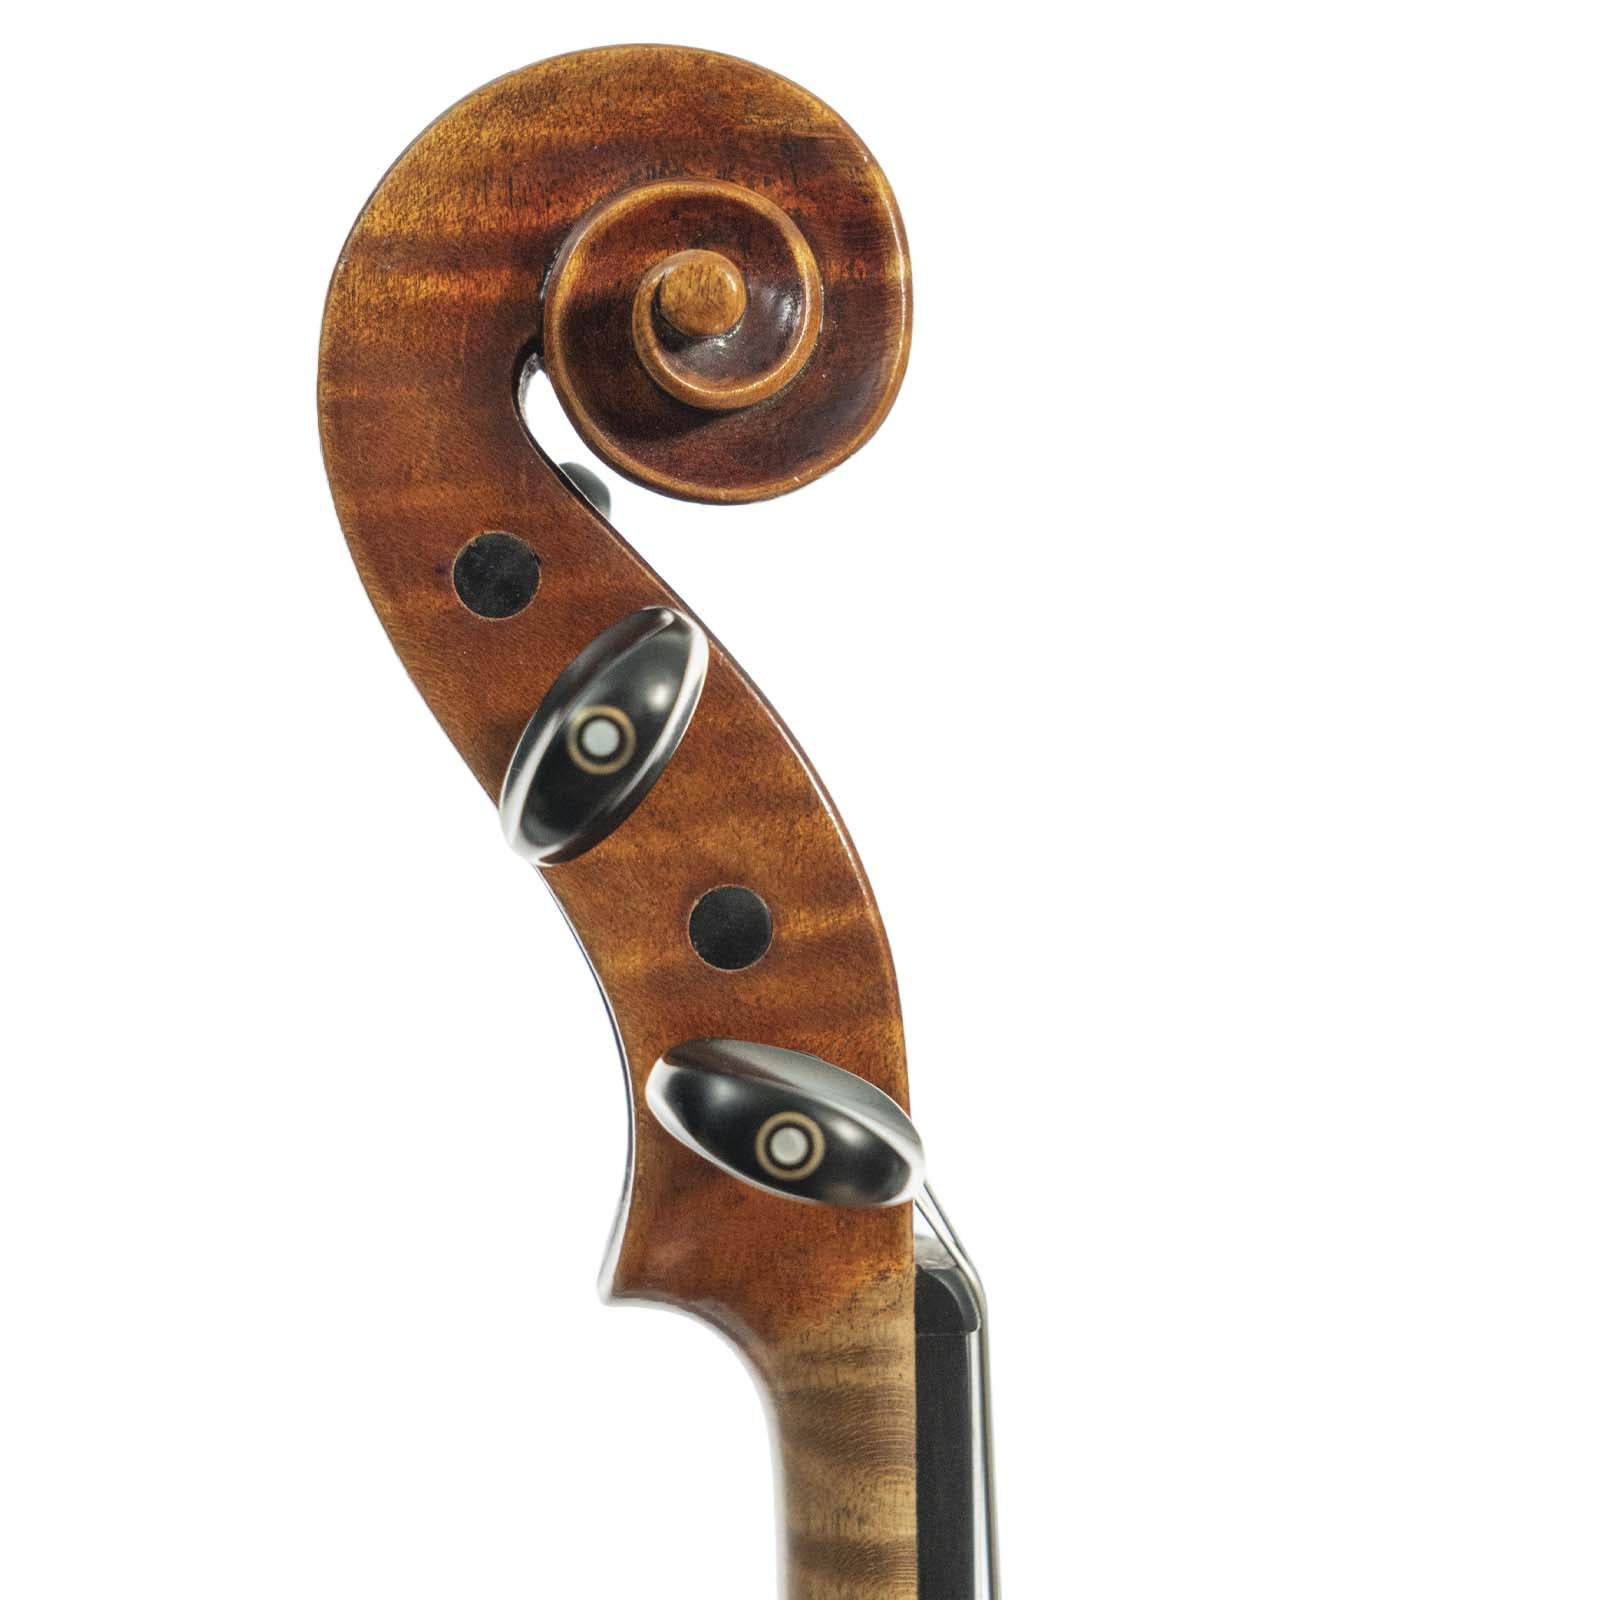 E.H. Roth IVR Violin, Markneukirchen, 1929